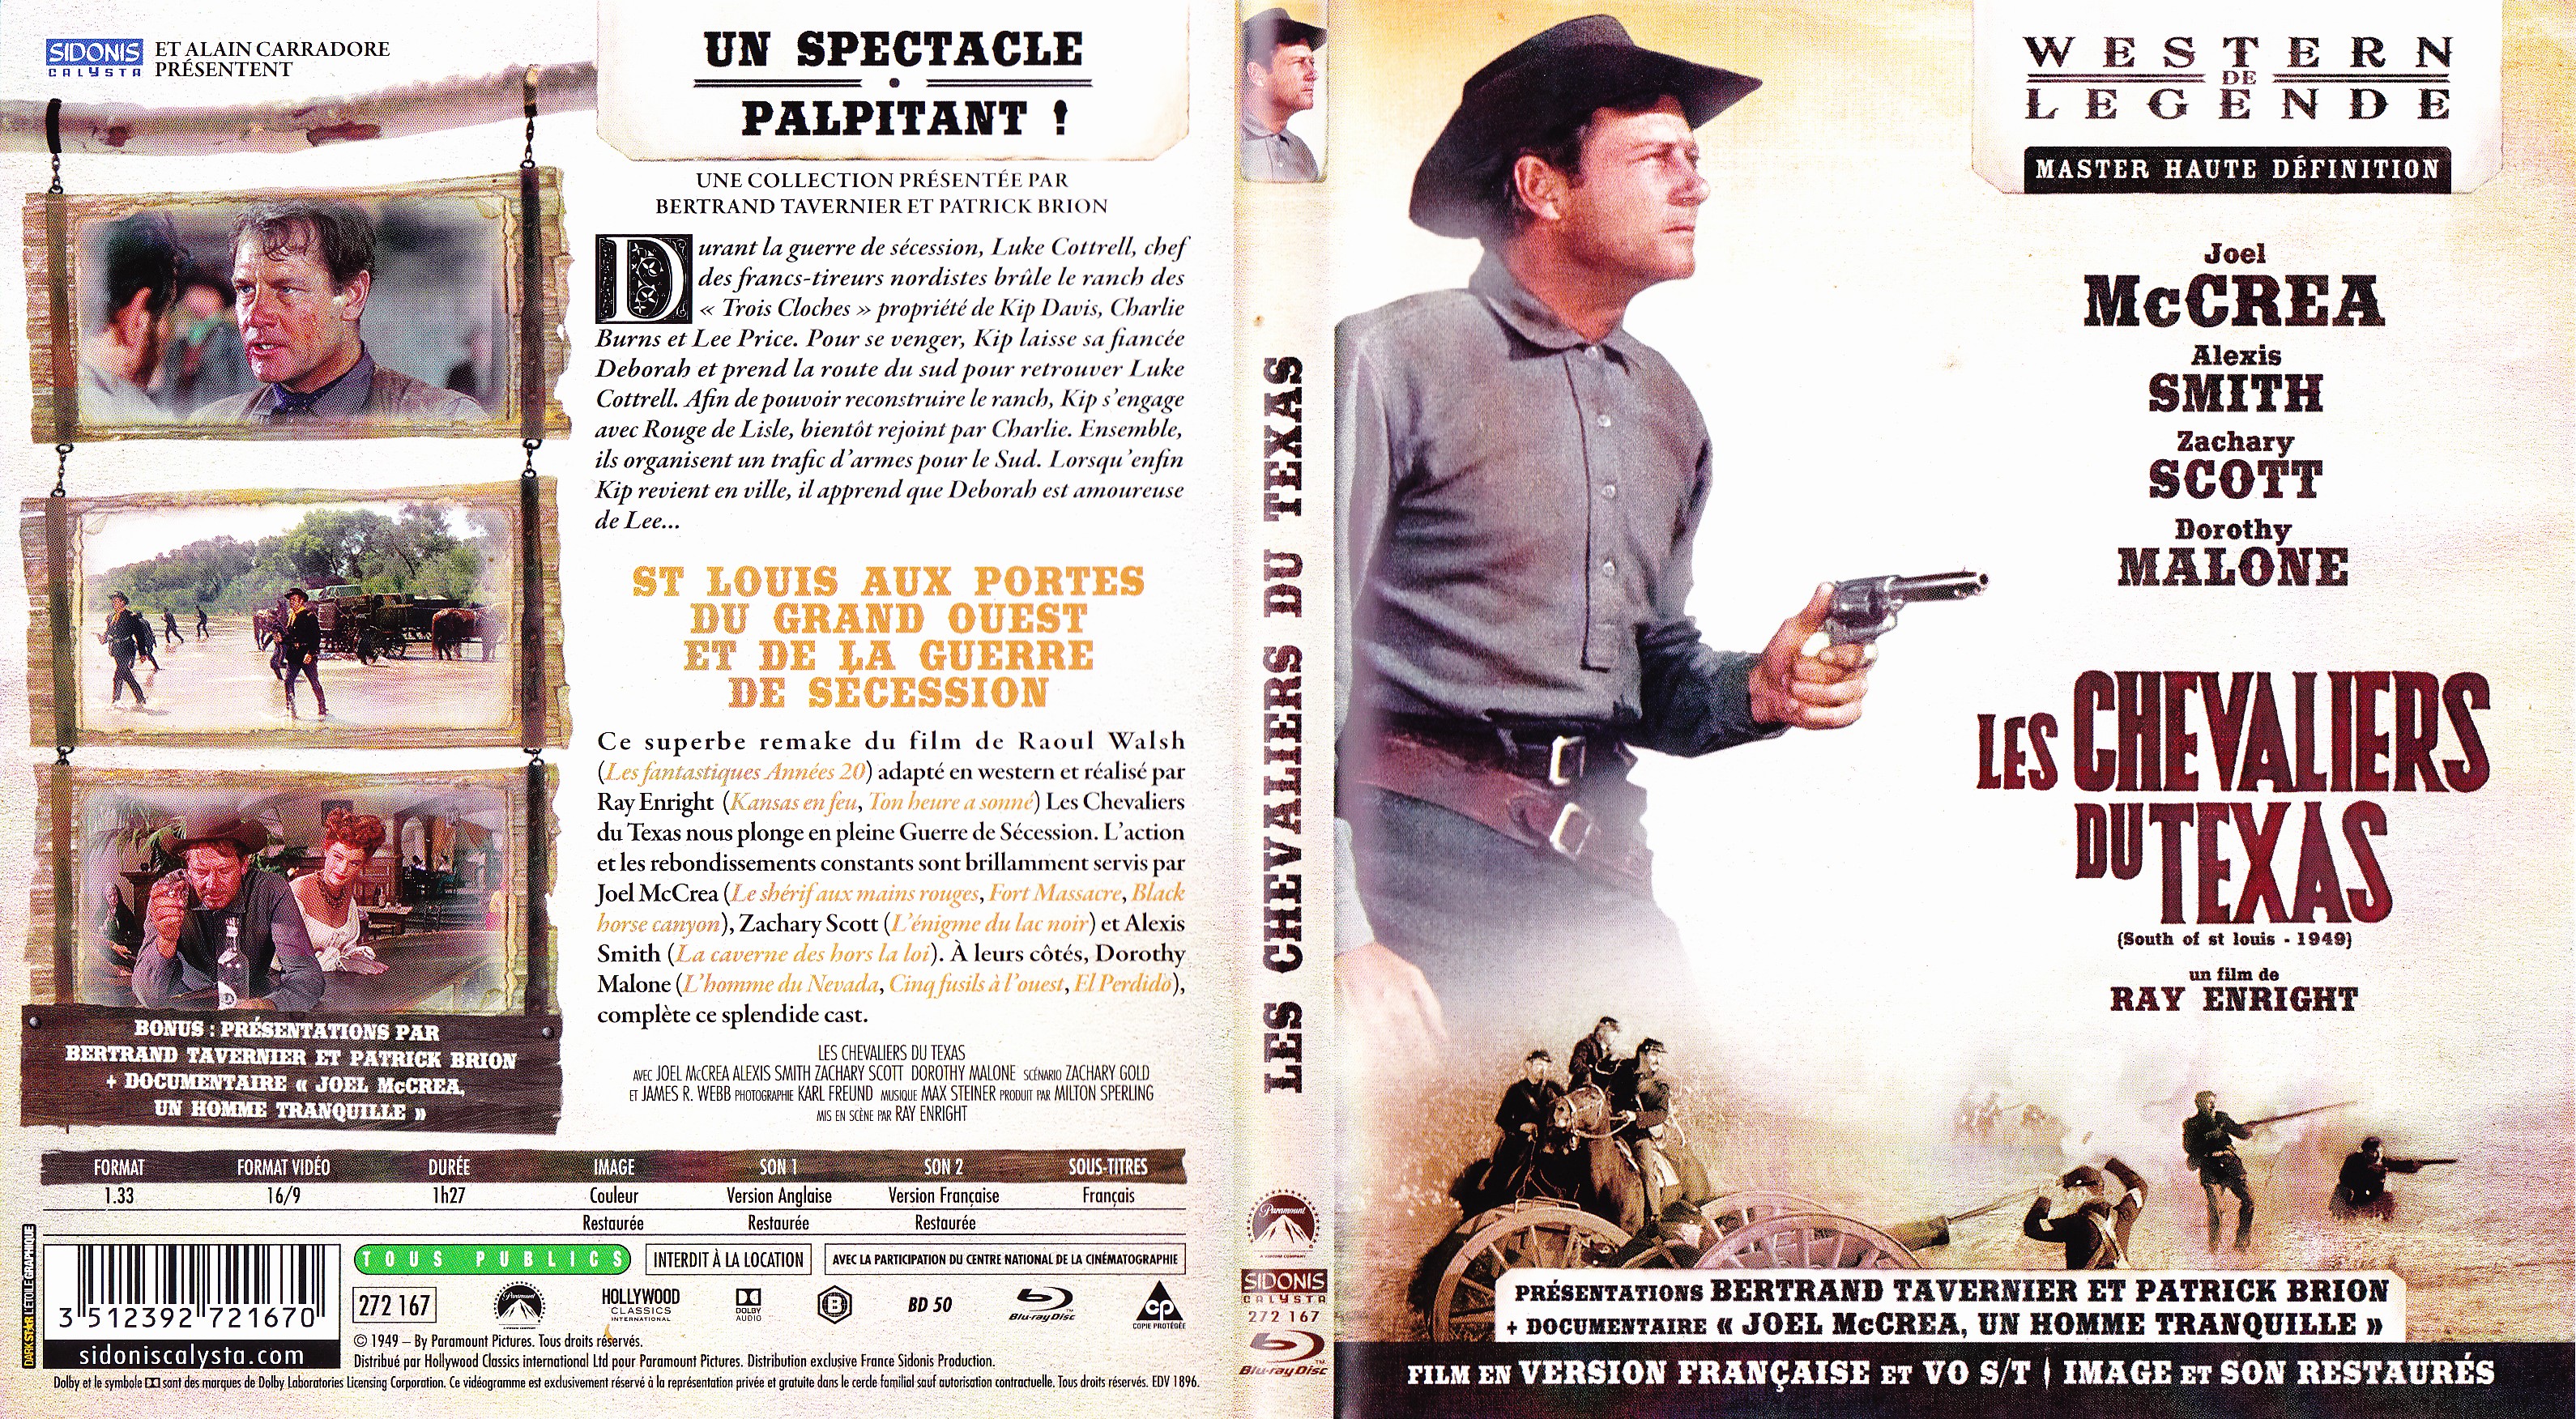 Jaquette DVD Les chevaliers du Texas (BLU-RAY)